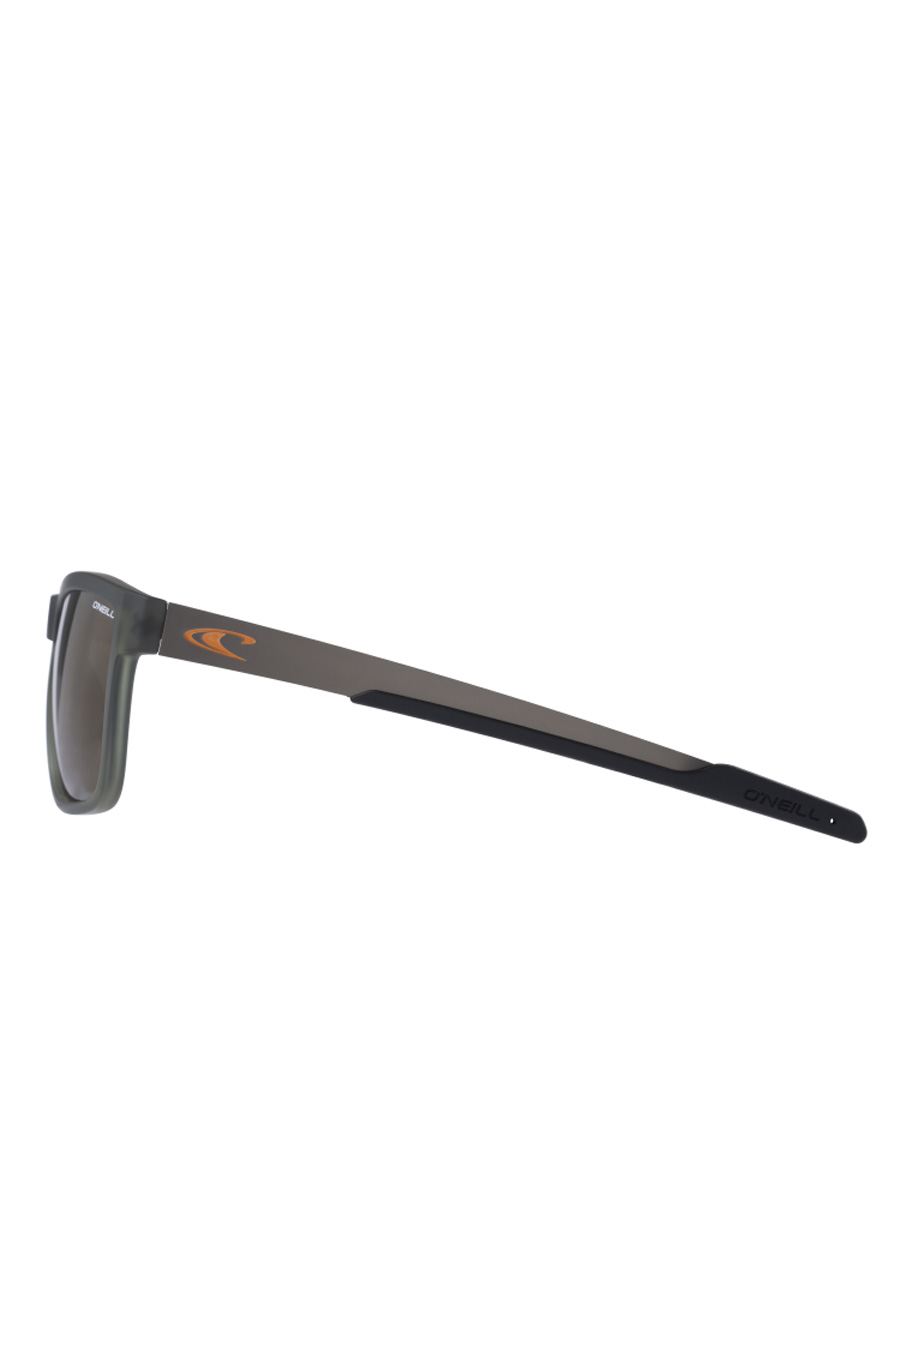 Sunglasses ONEILL ONS-9006-20-109P